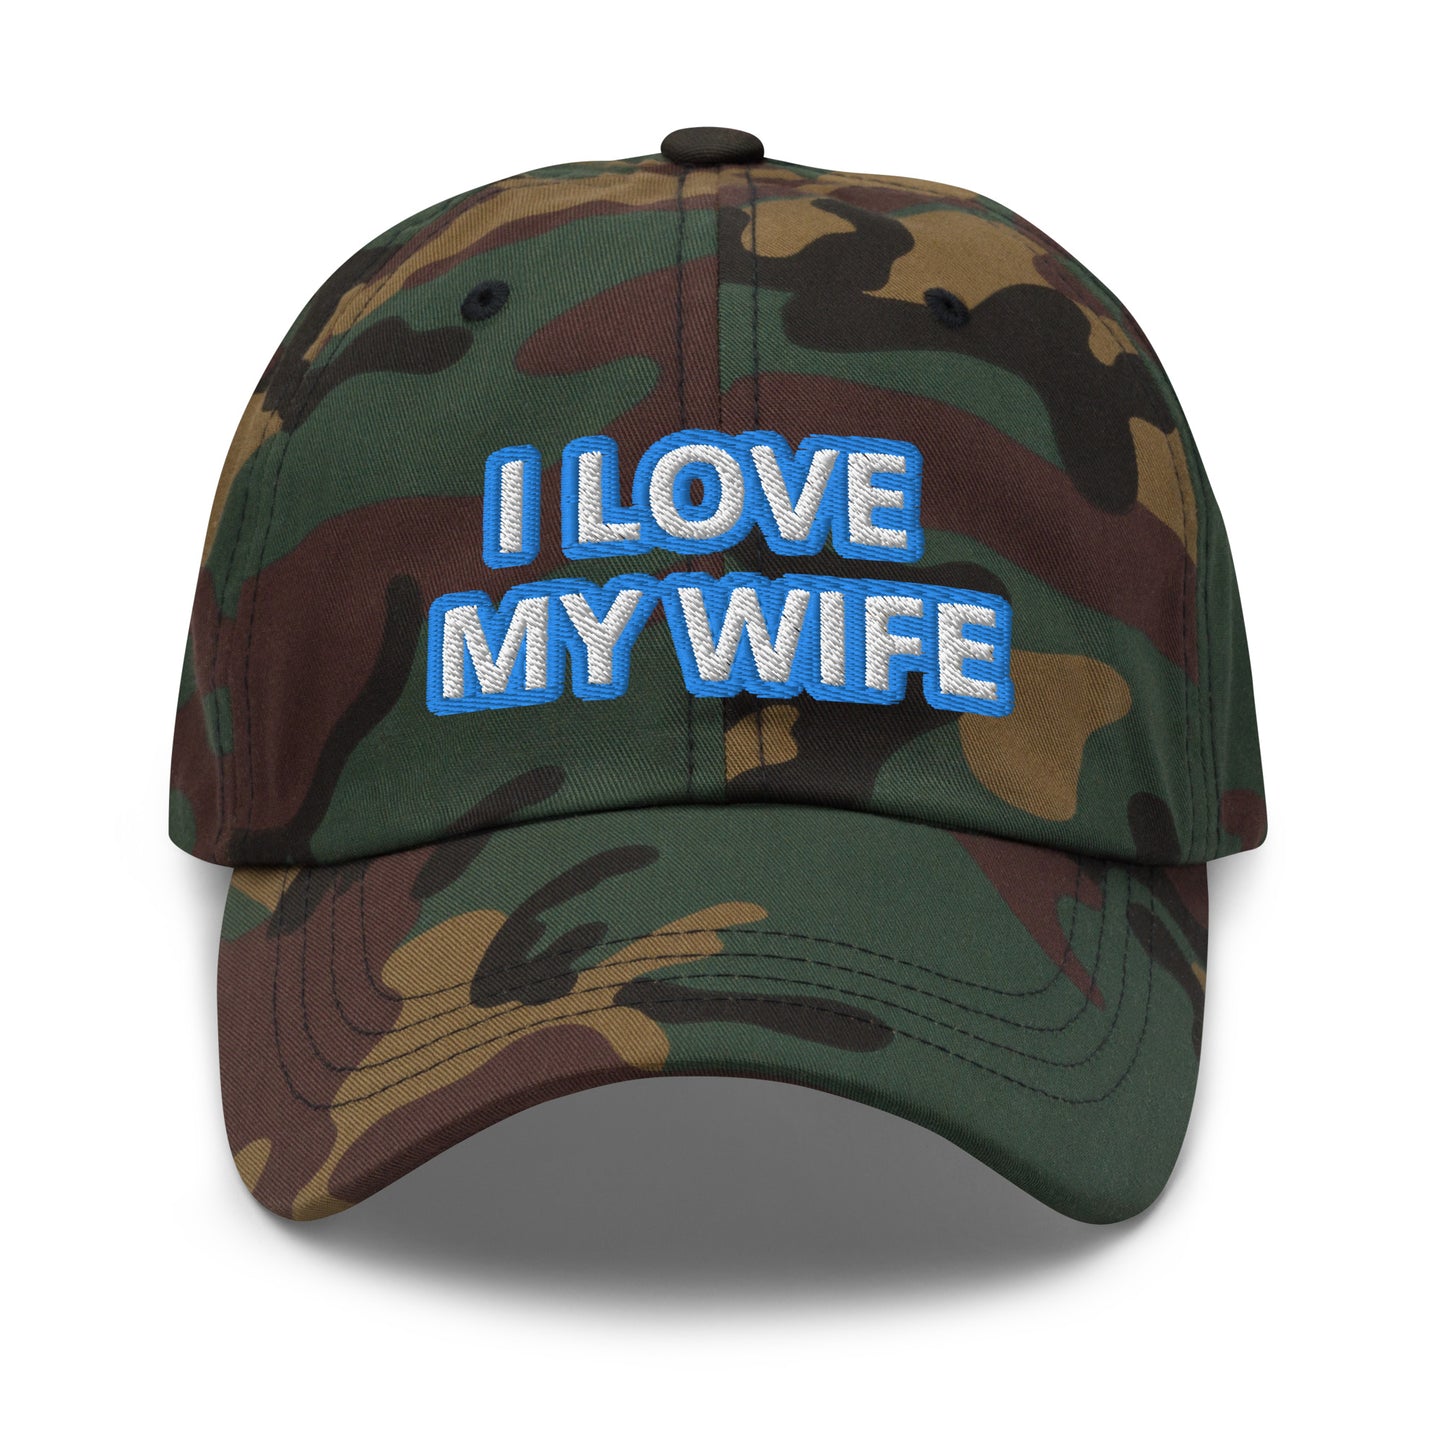 I LOVE MY WIFE classic hat